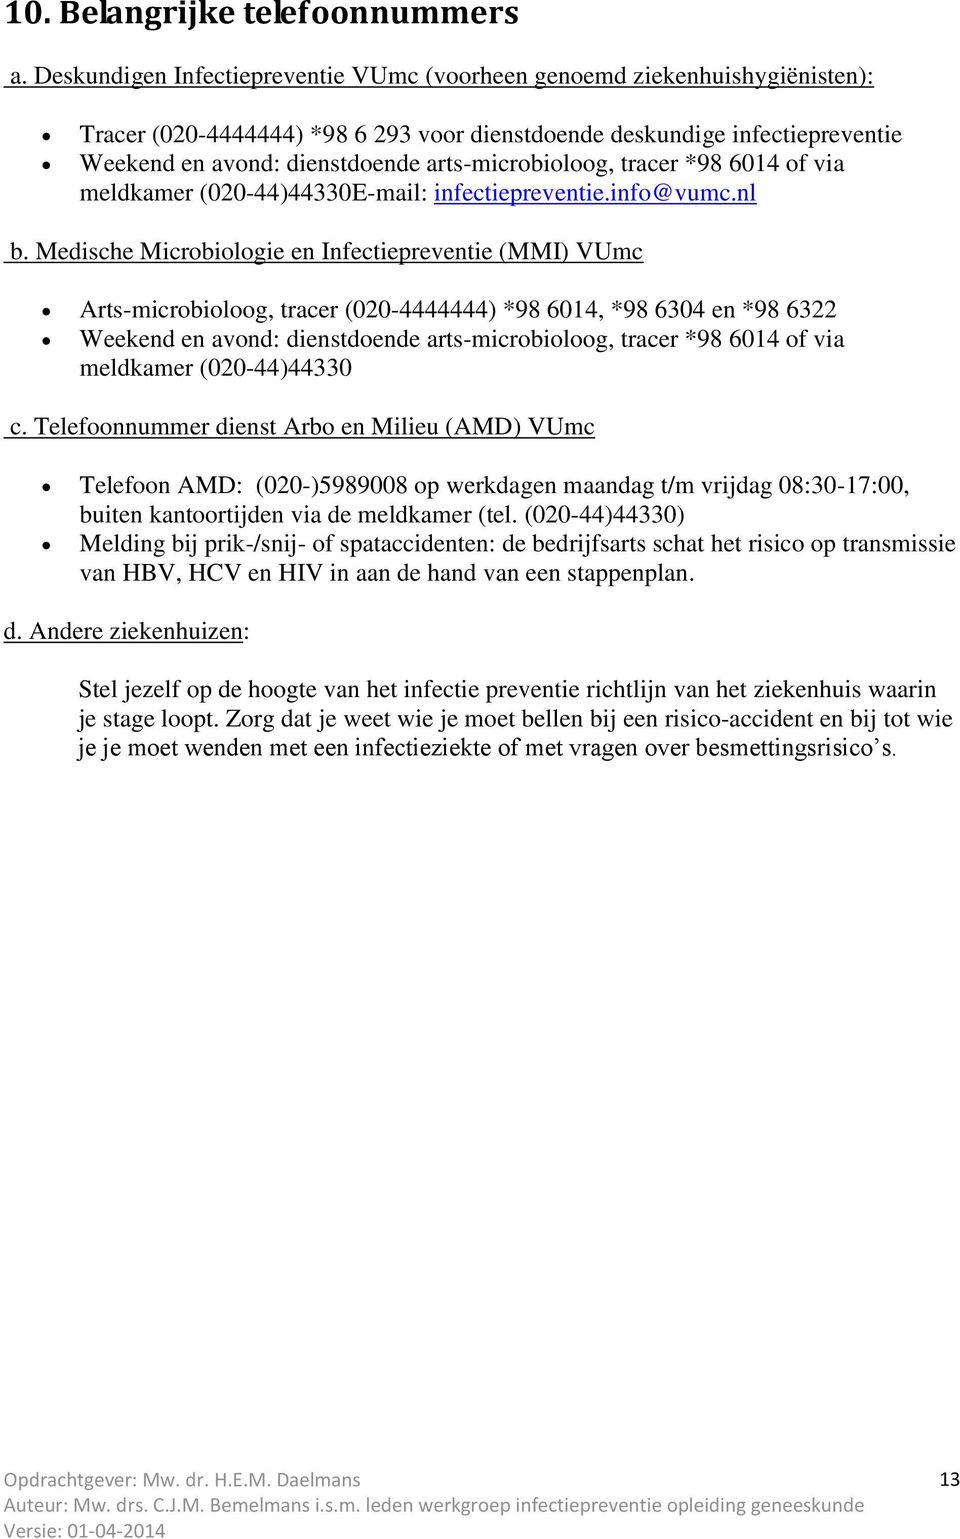 arts-microbioloog, tracer *98 6014 of via meldkamer (020-44)44330E-mail: infectiepreventie.info@vumc.nl b.